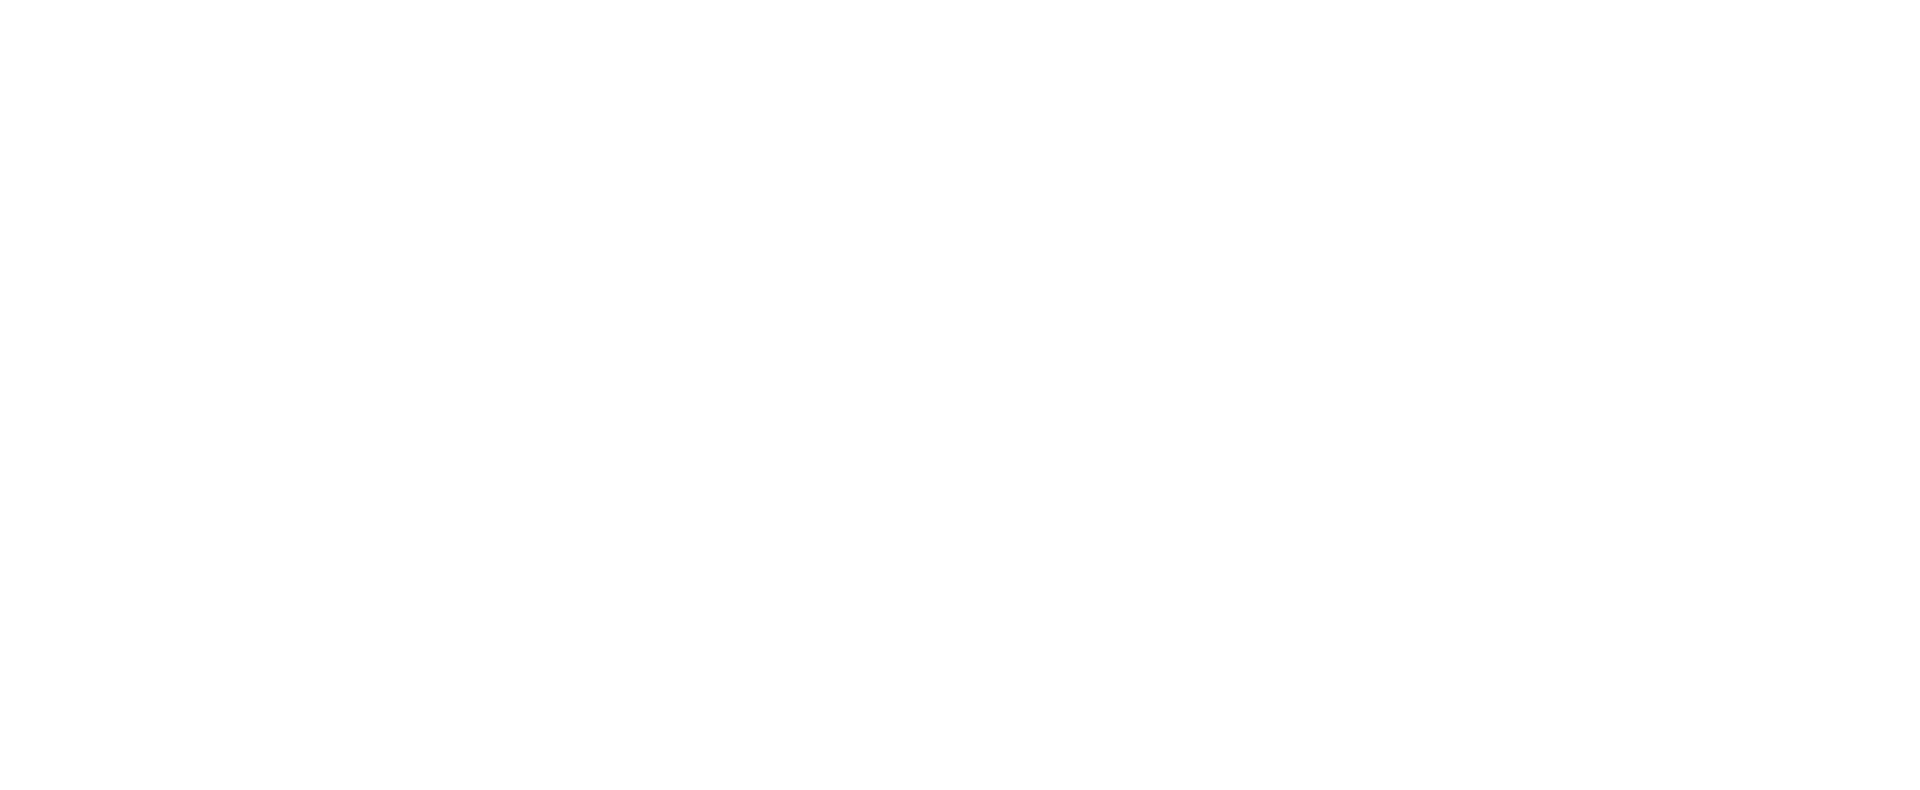 Curioso game de terror Choo-Choo Charles já está disponível na Steam